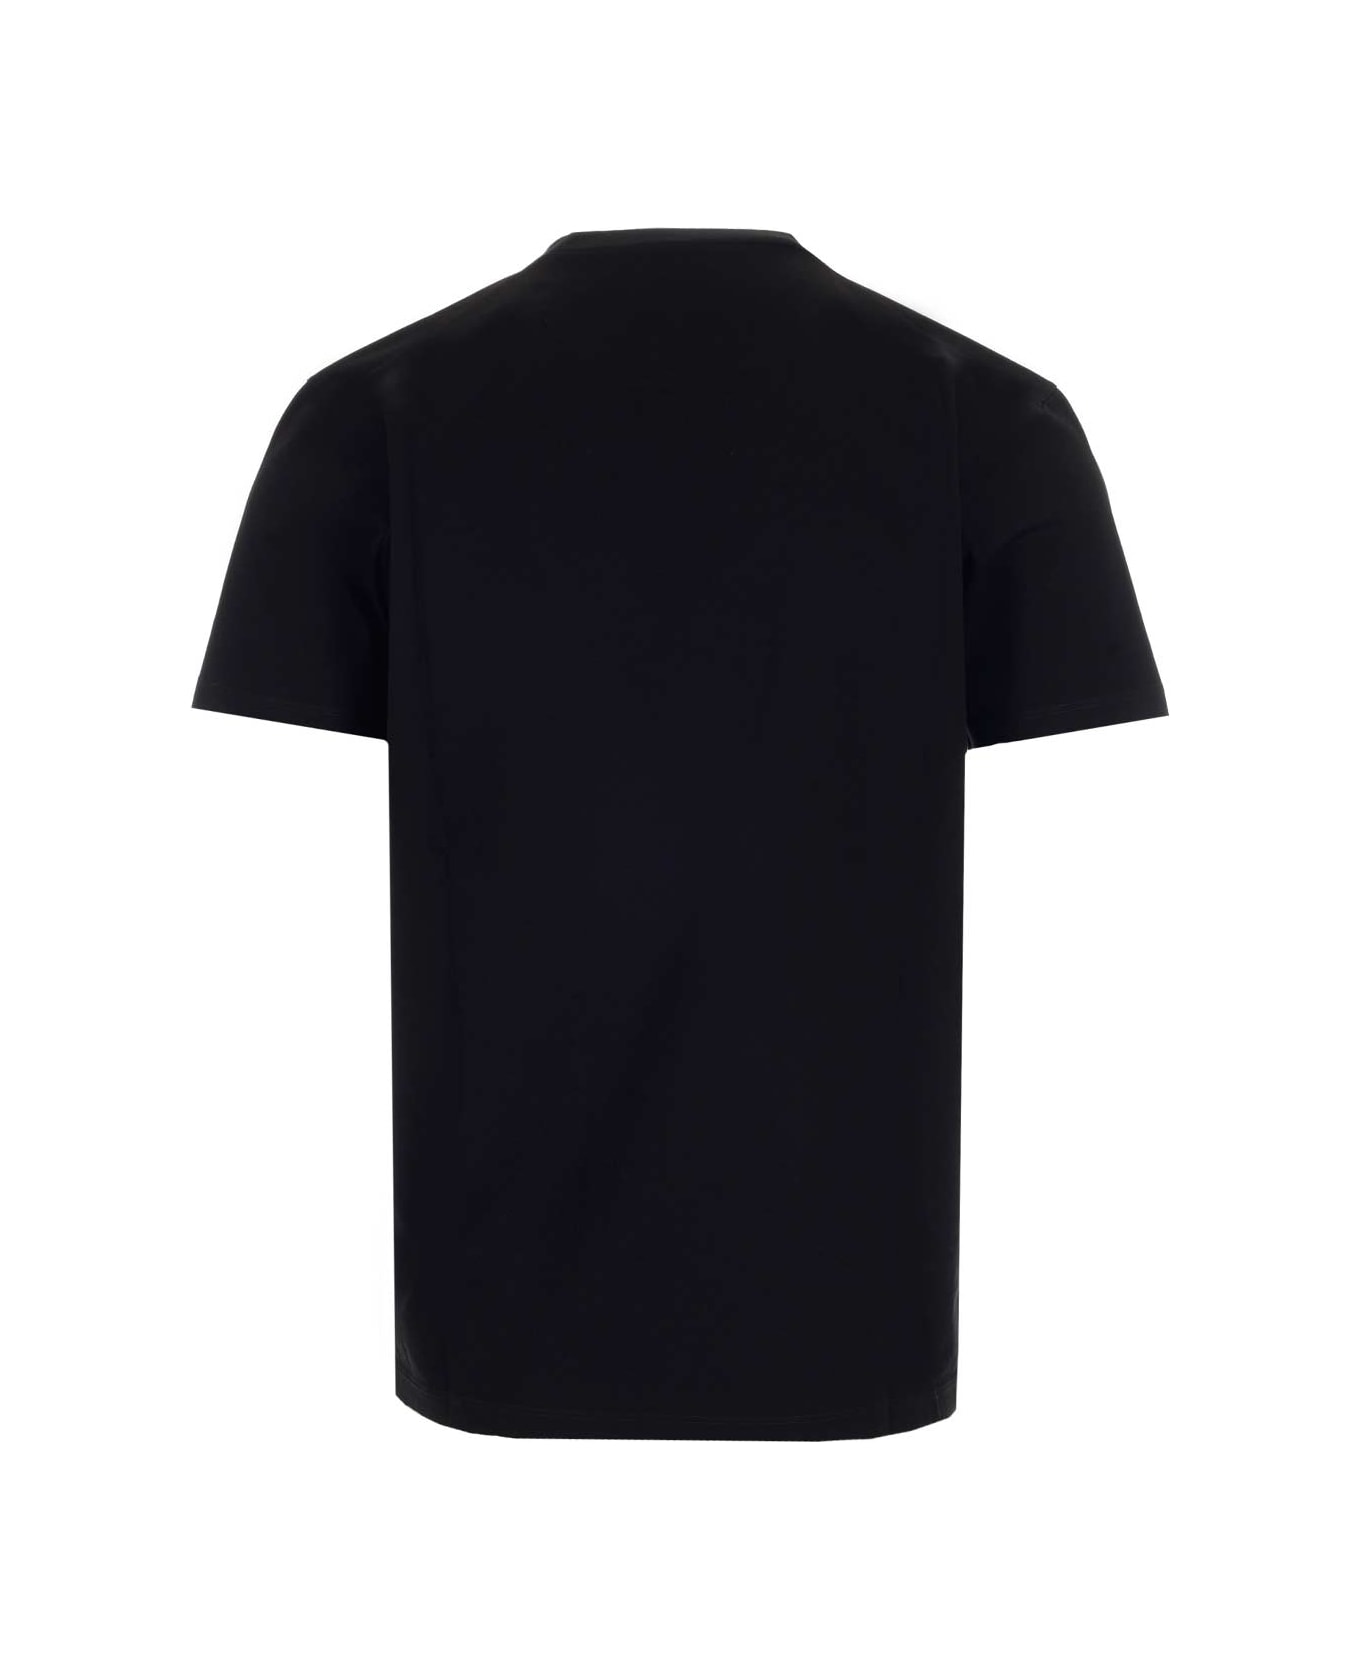 Vivienne Westwood Black 'orbital' T-shirt - BLACK